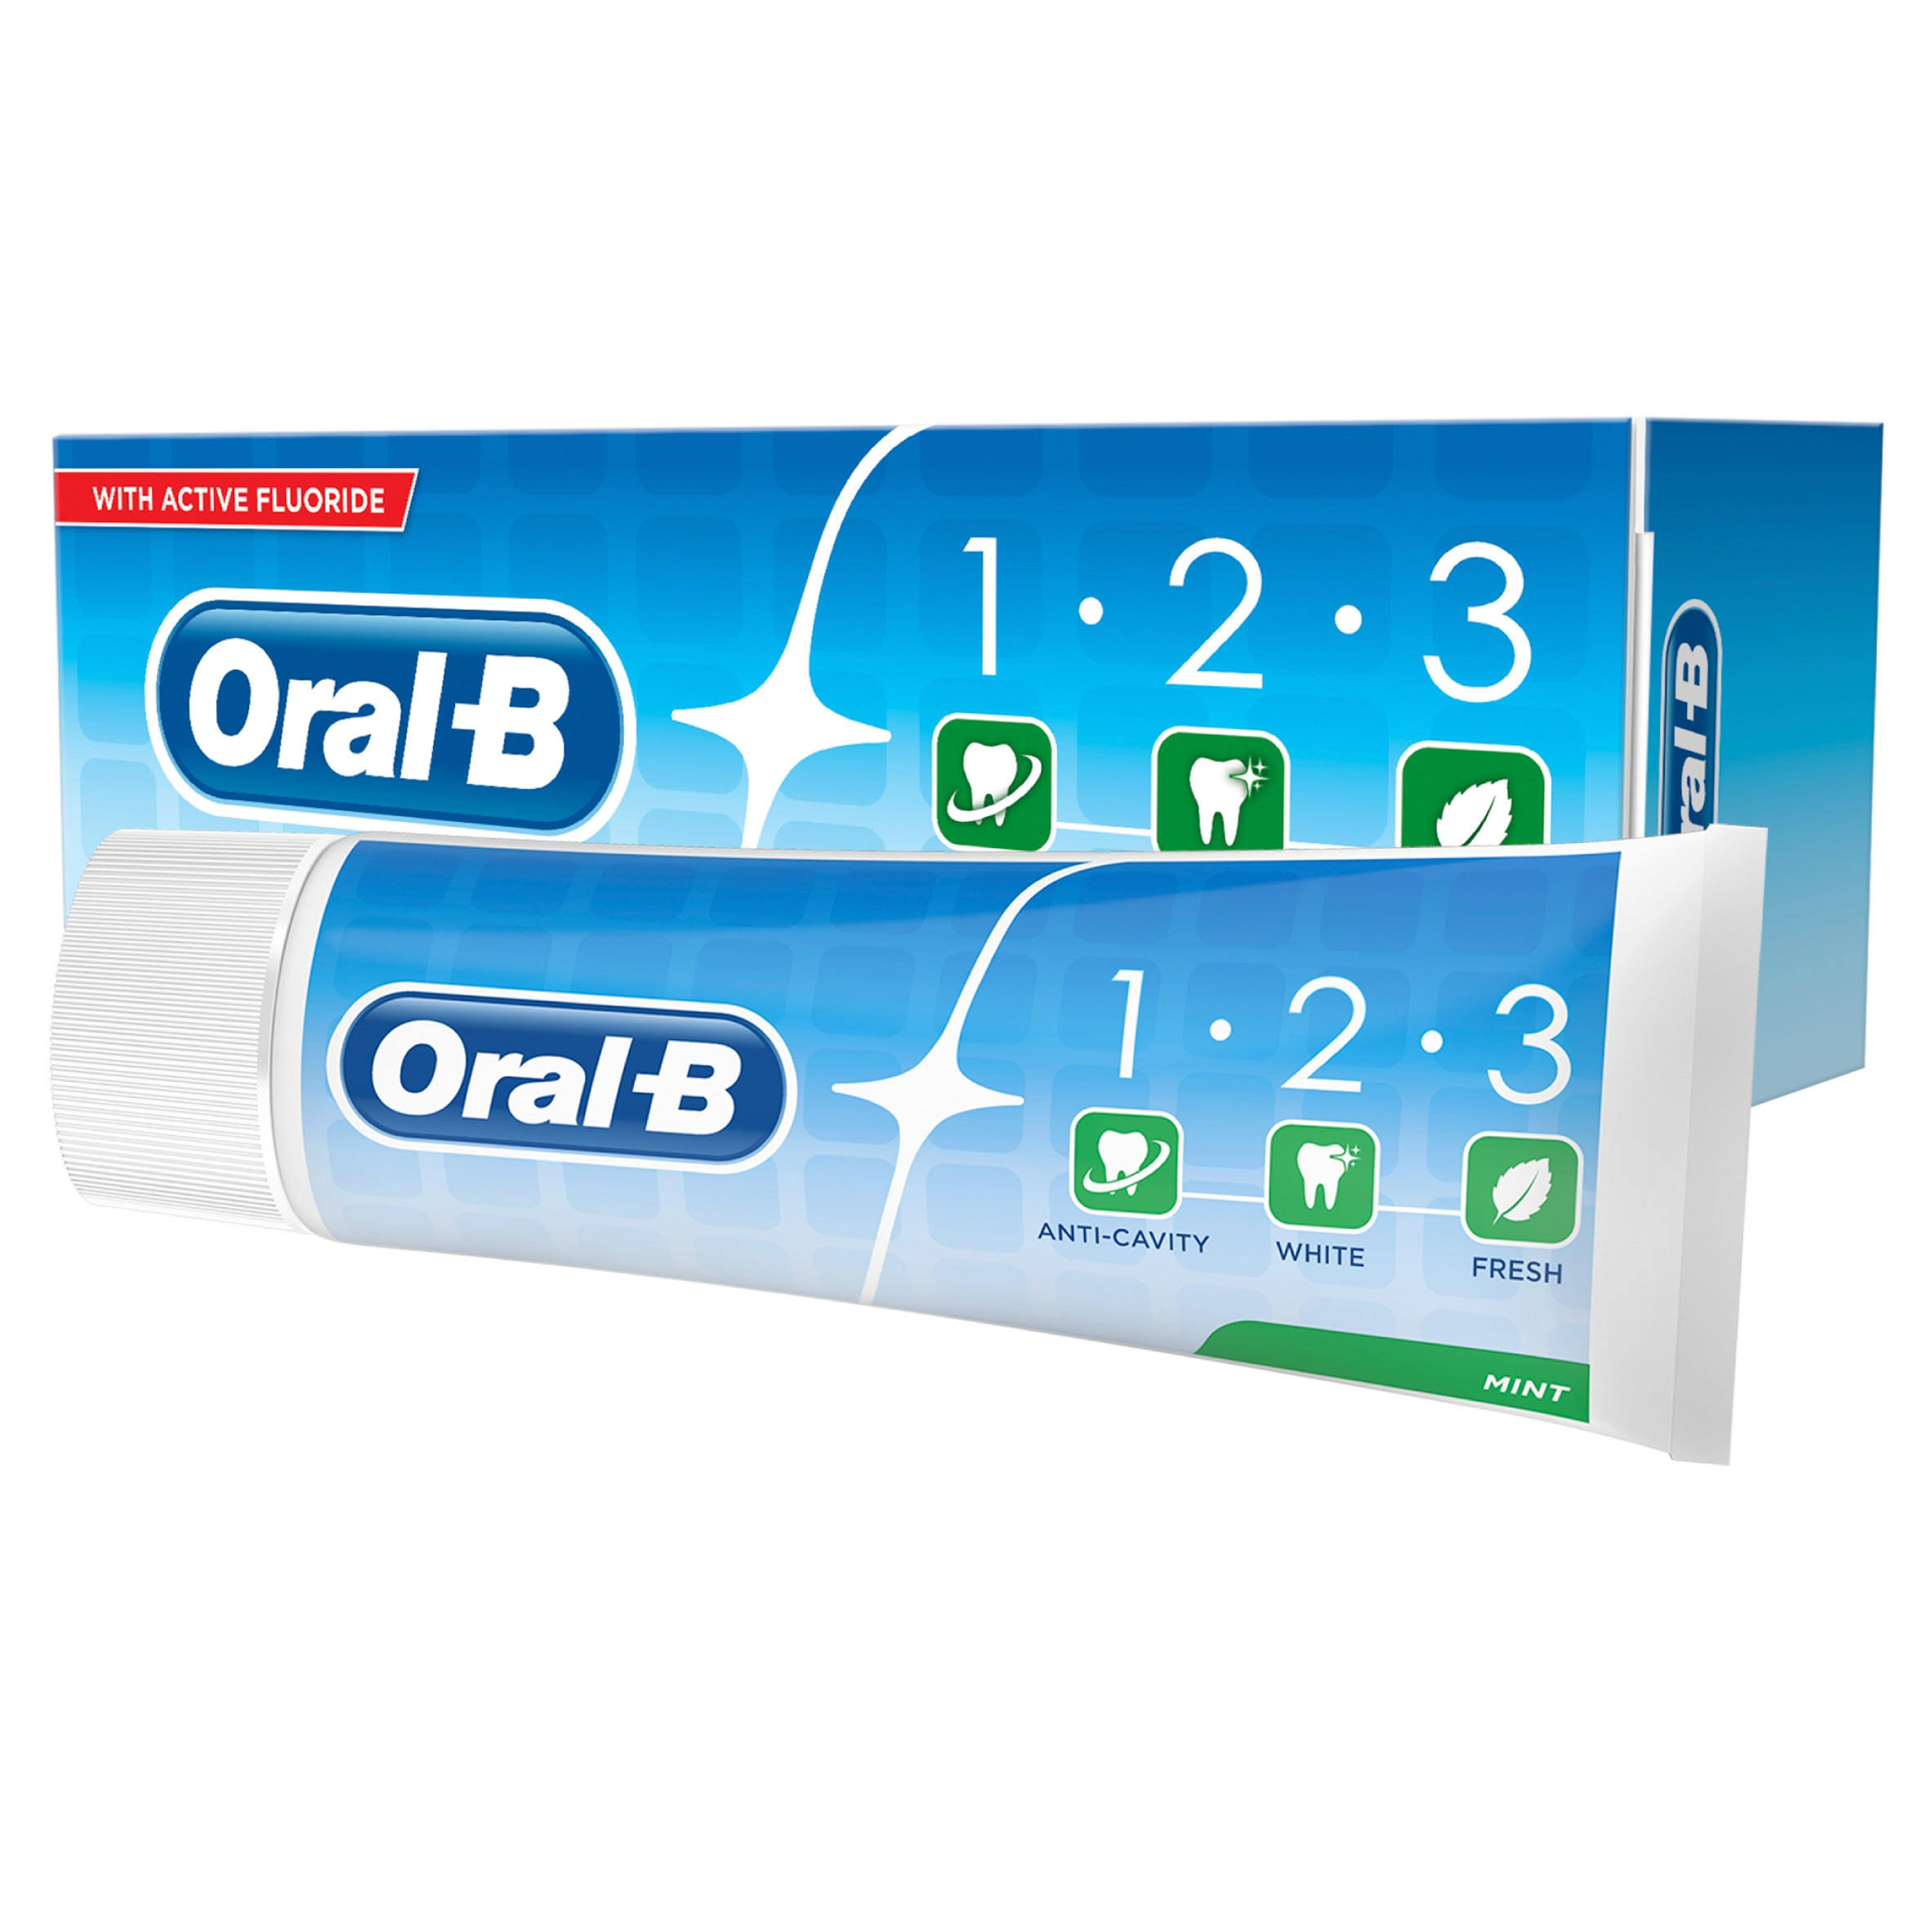 Oral B 123 Fresh Mint Toothpaste - 100ml